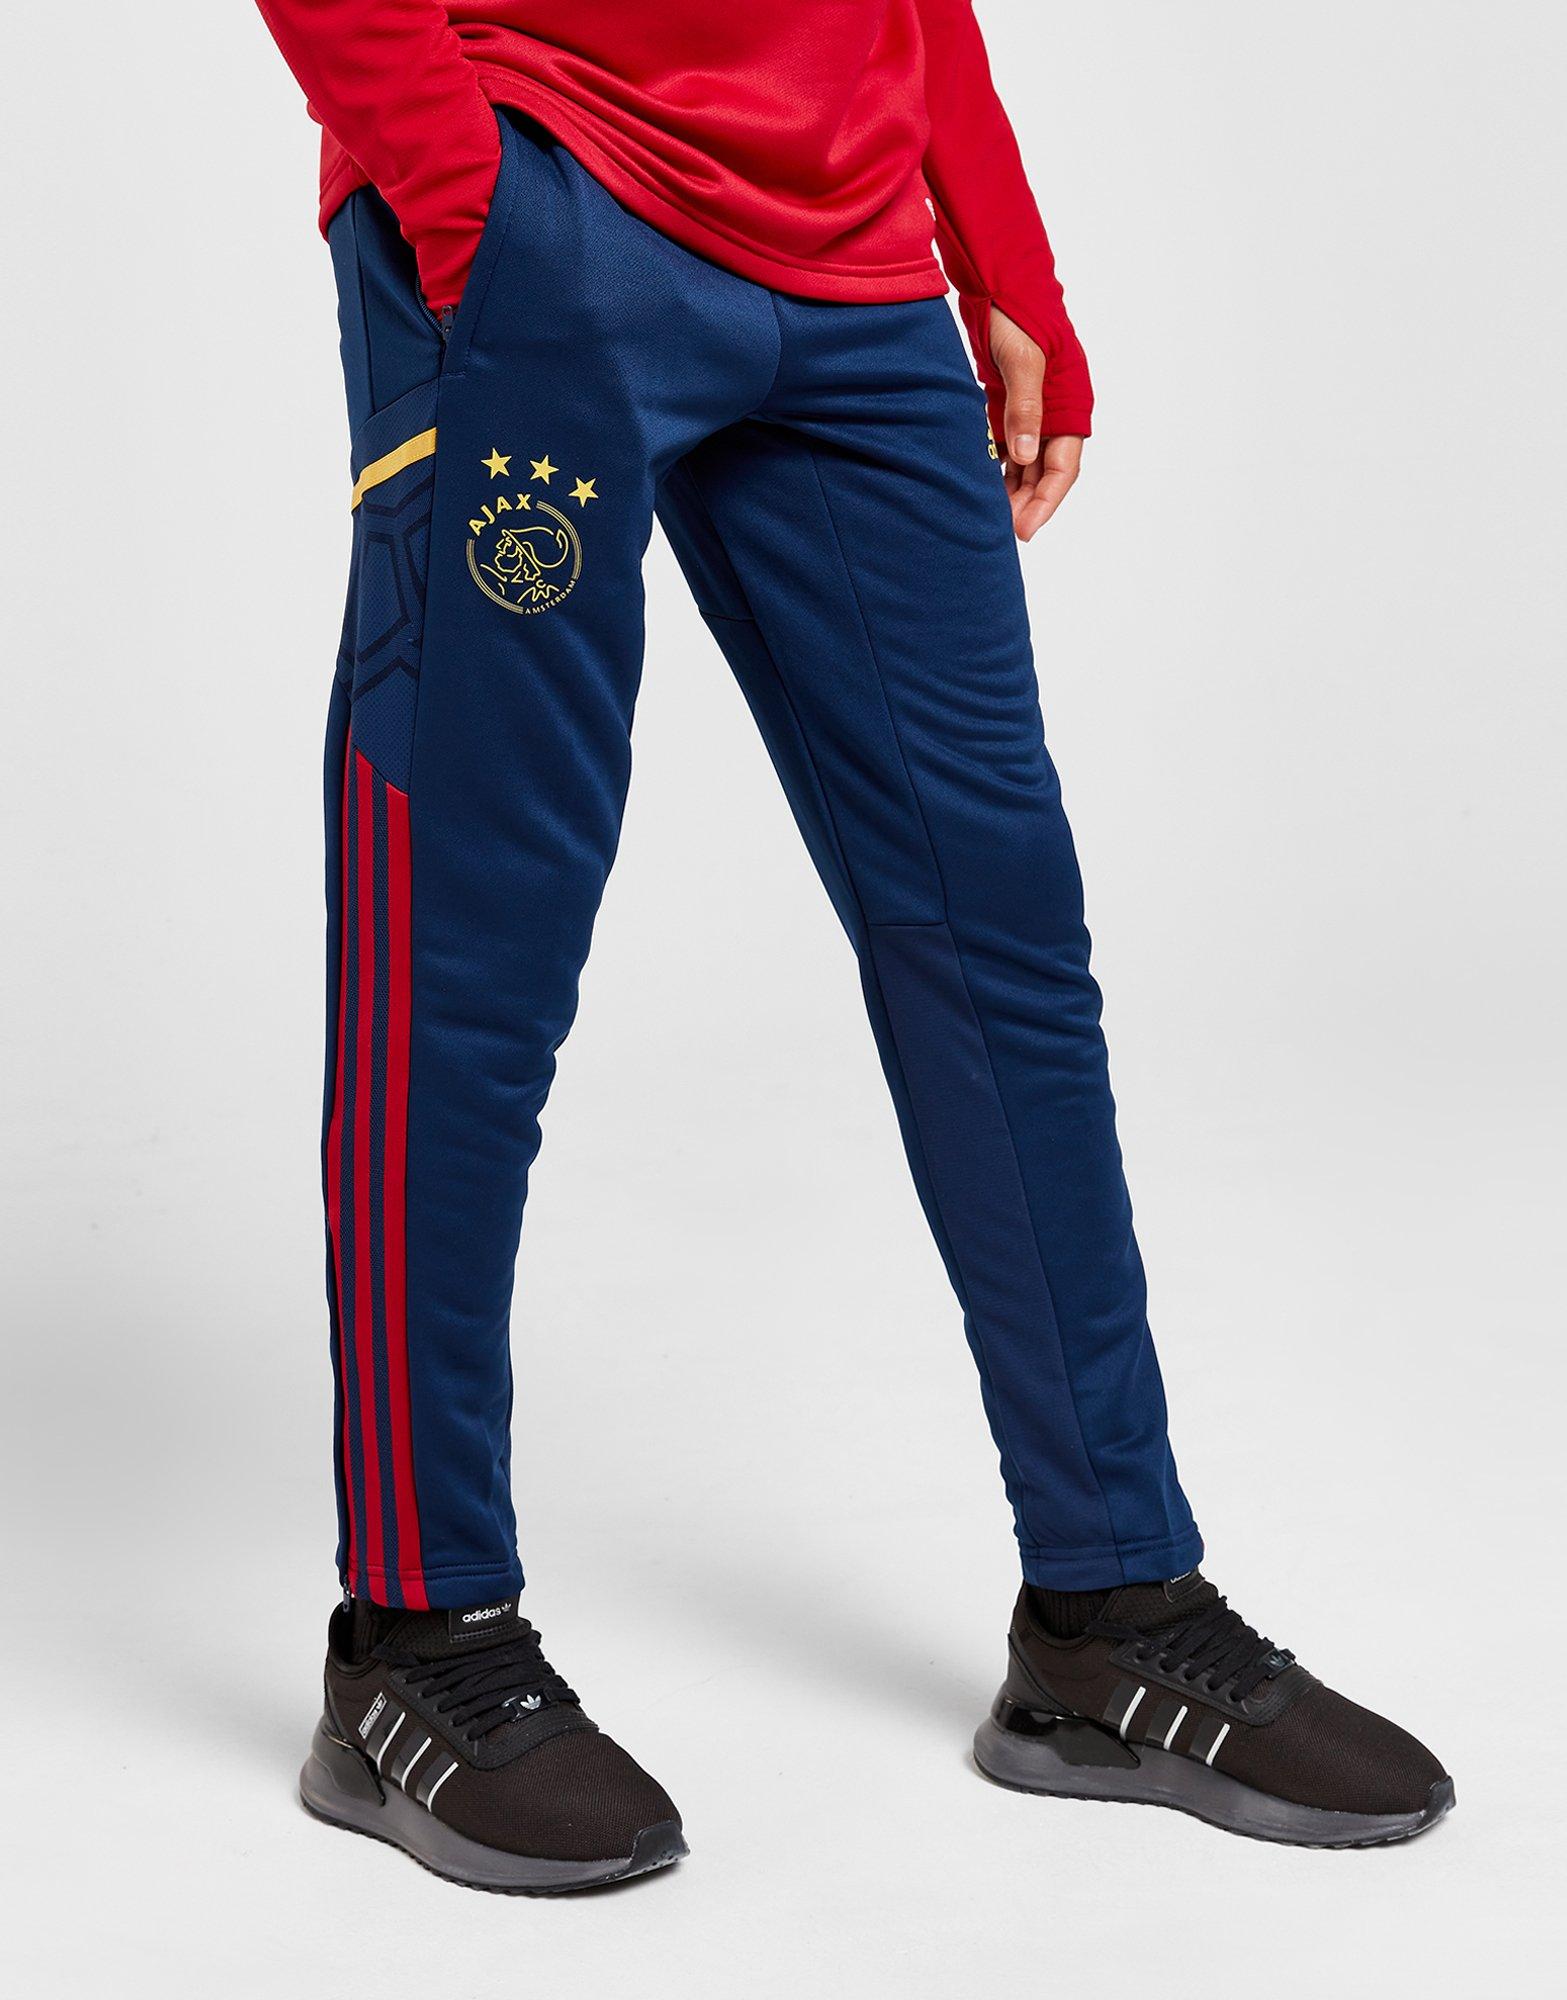 krassen twintig bom adidas Ajax Training Track Pants Junior - JD Sports Nederland